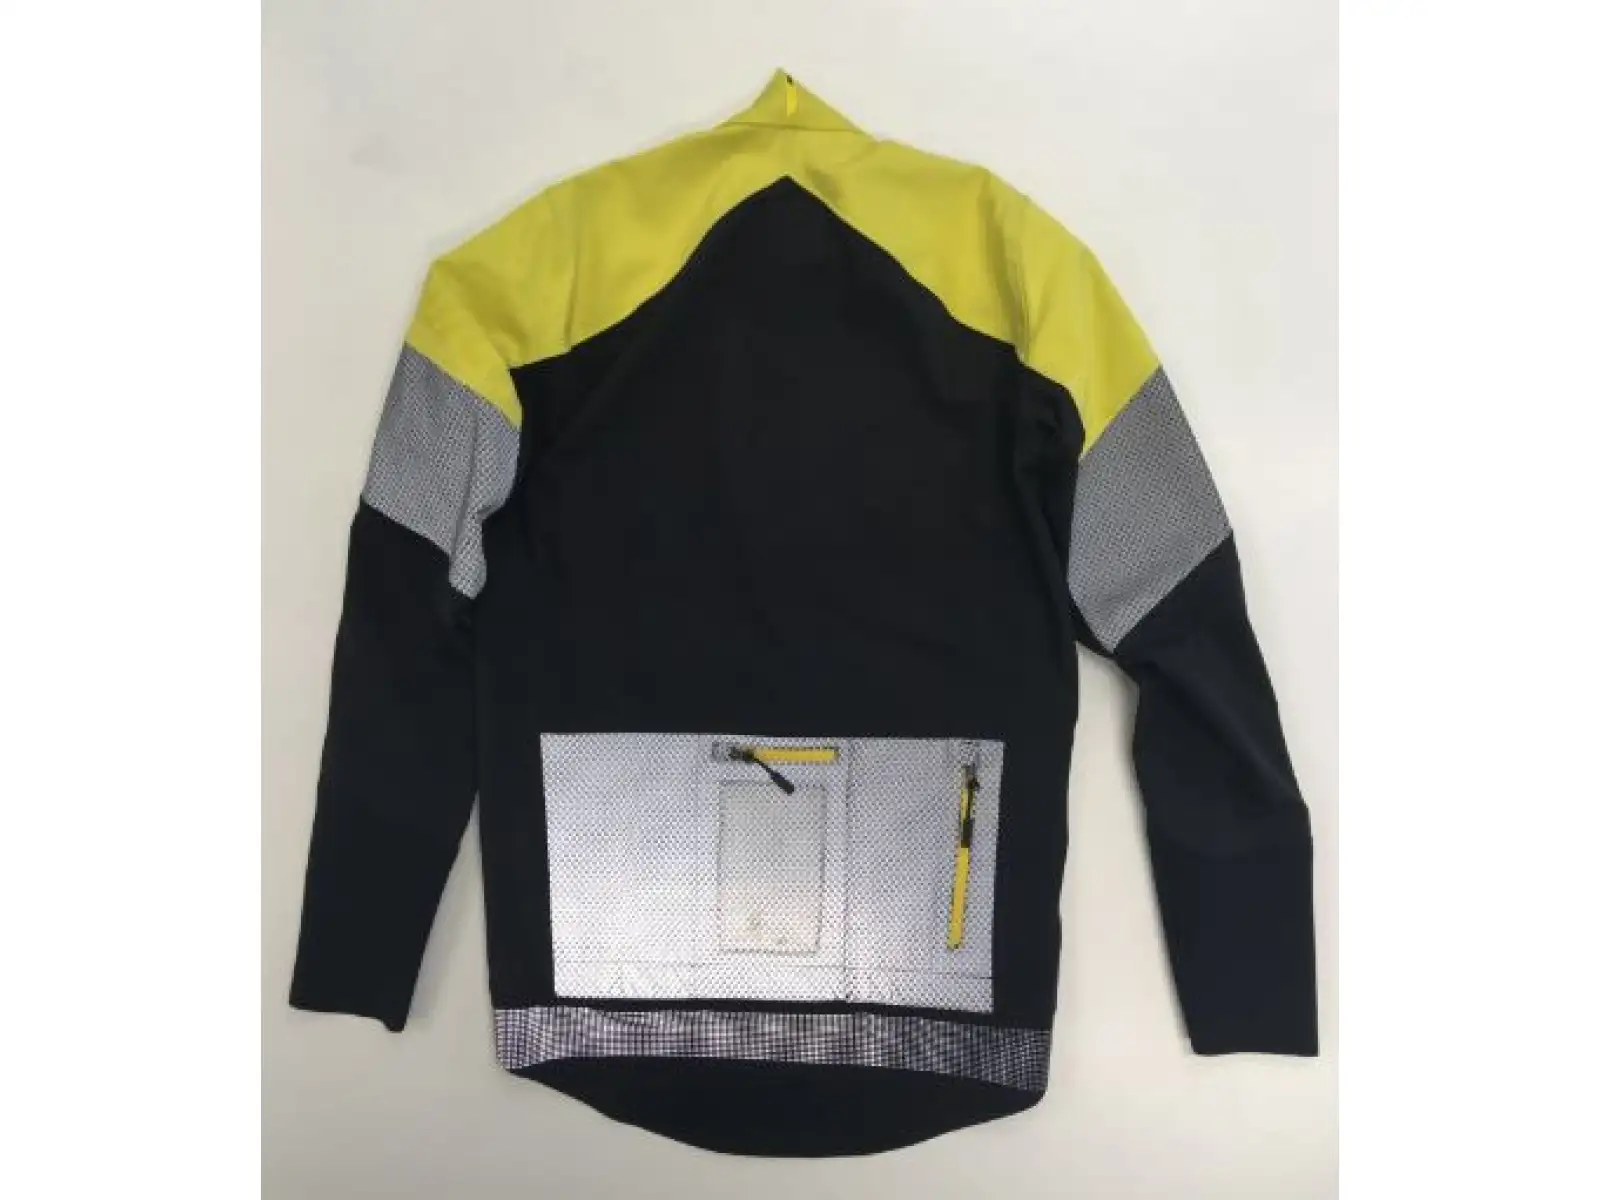 Mavic Cosmic Pro H2O bunda pánská yellow/black 2018 vel. M VZOREK